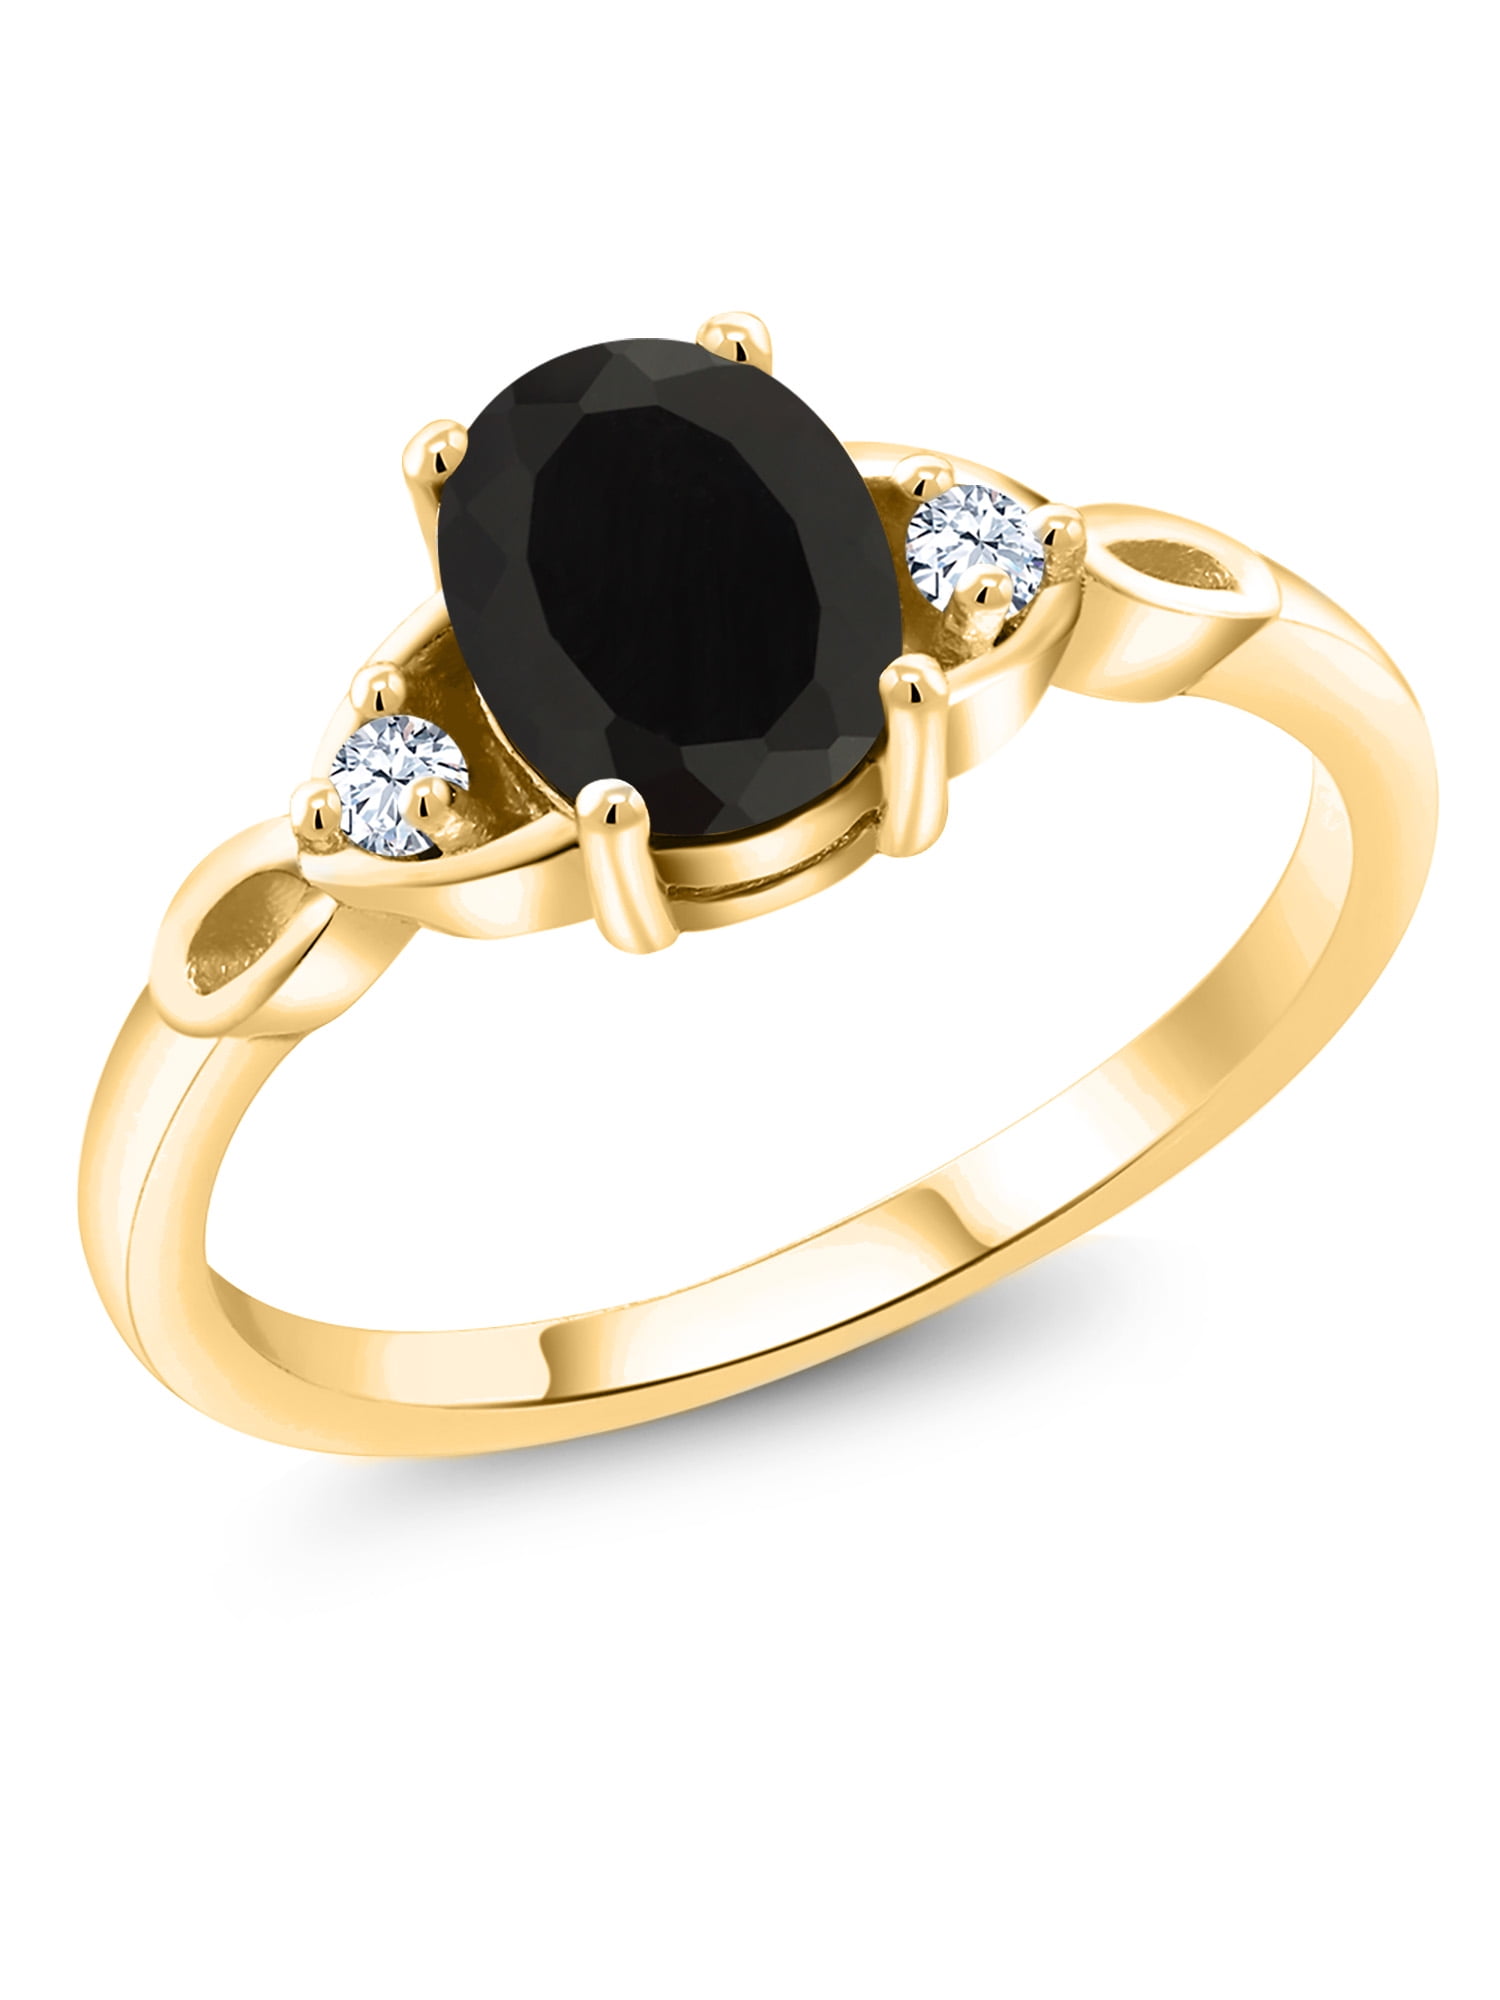 Artisan Handmade Natural Black Onyx Gemstone Solitaire Rings — Discovered